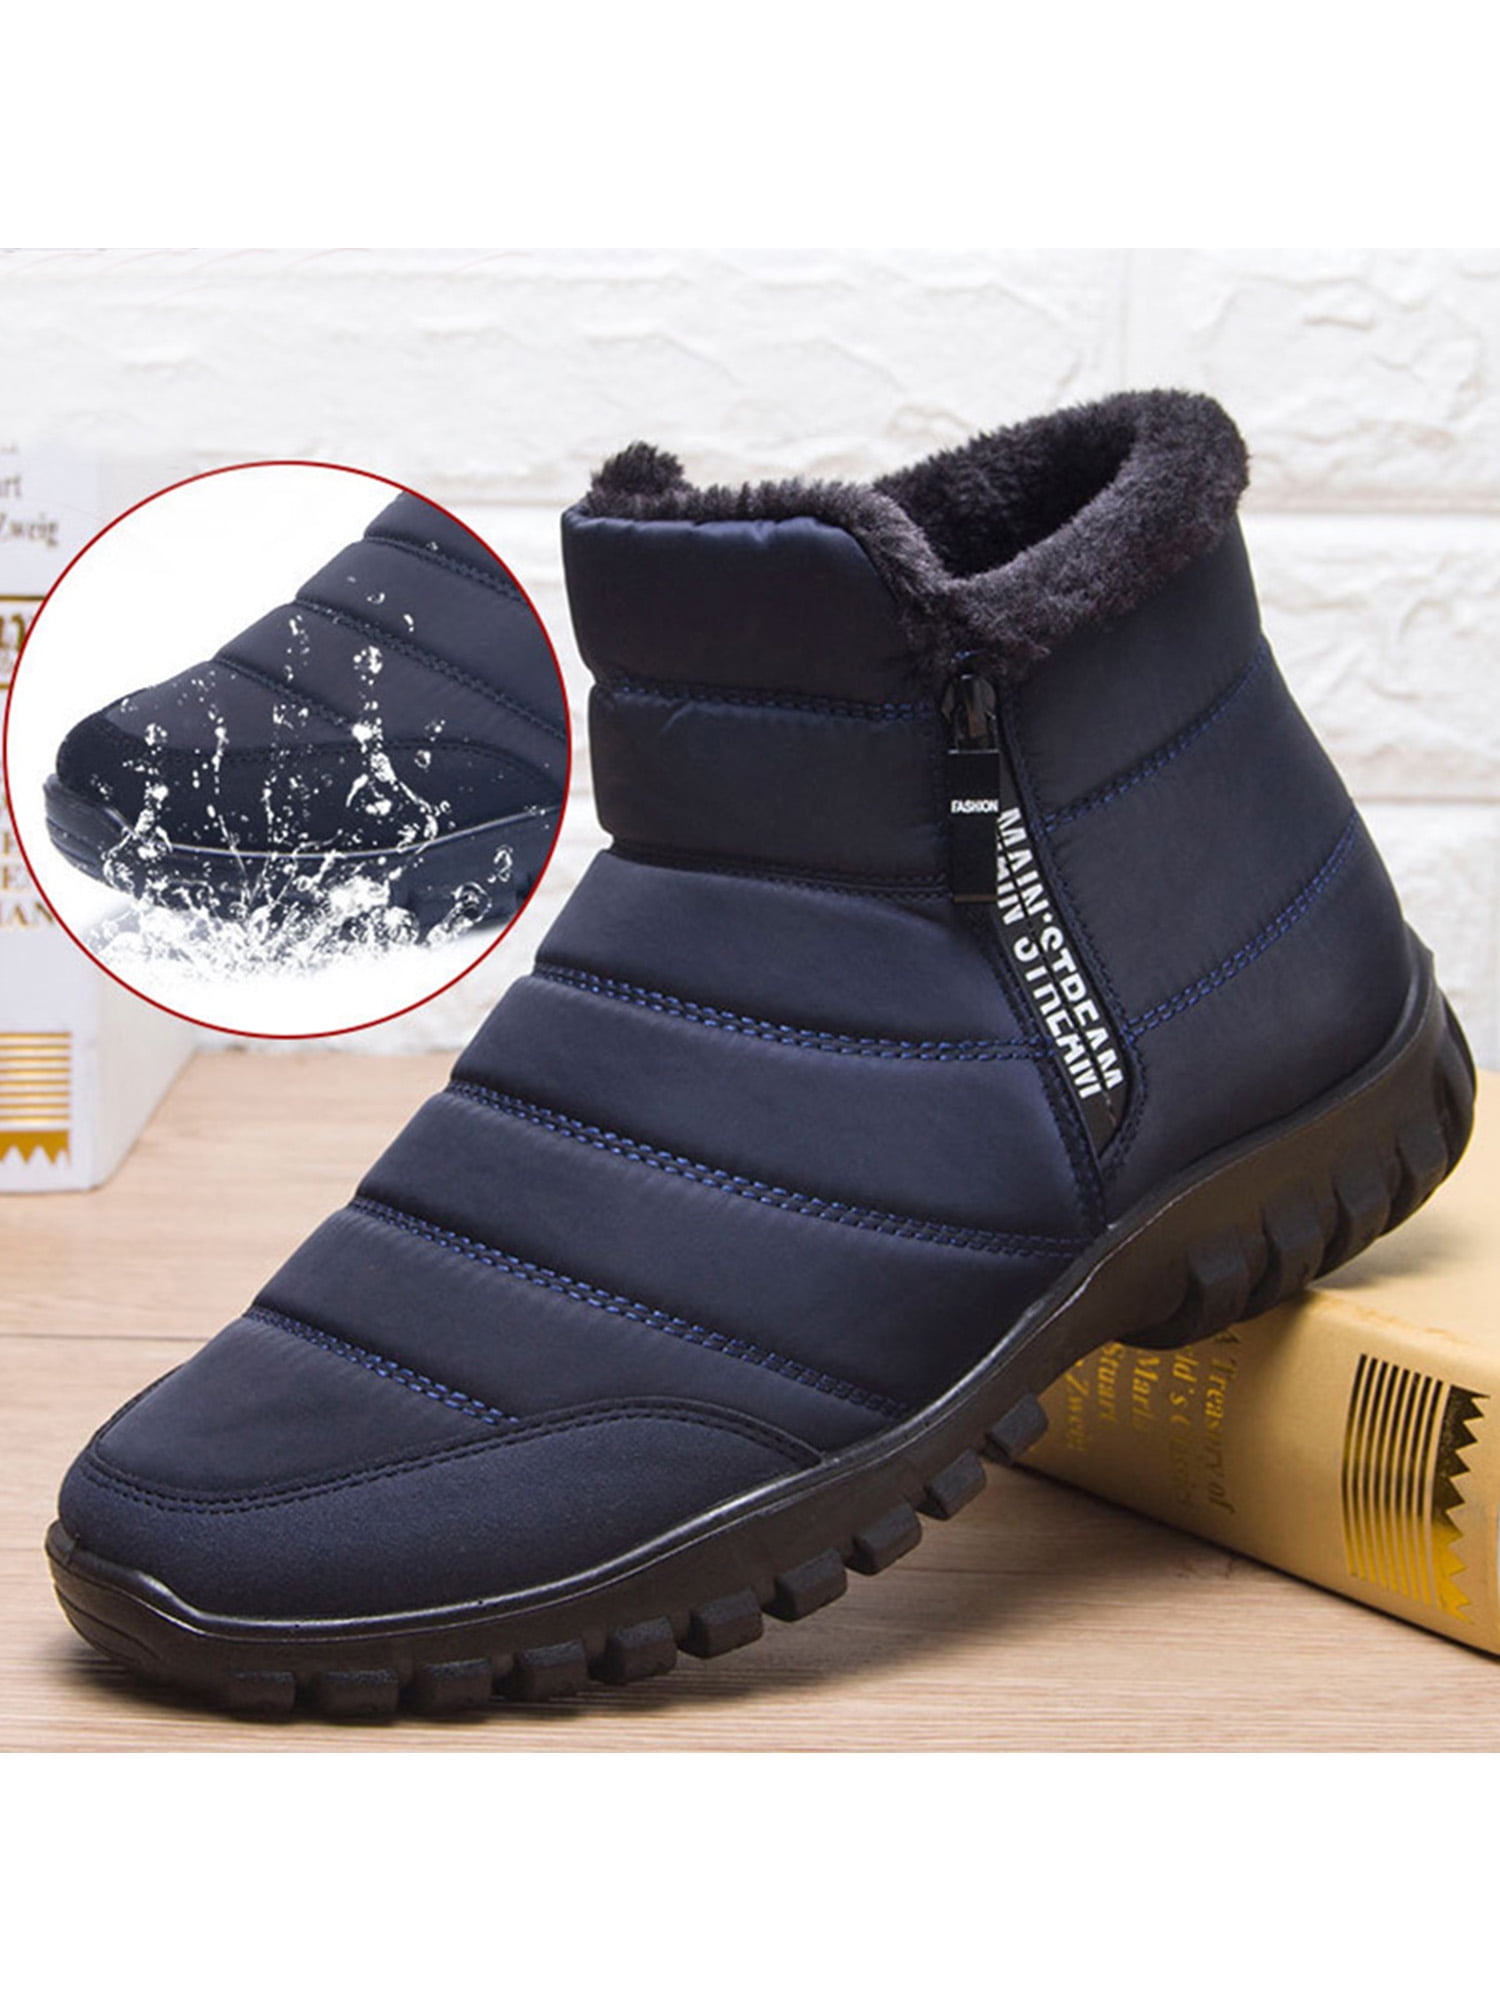 Mens Fleece Lined Boots With Zipper Flash Sales | bellvalefarms.com